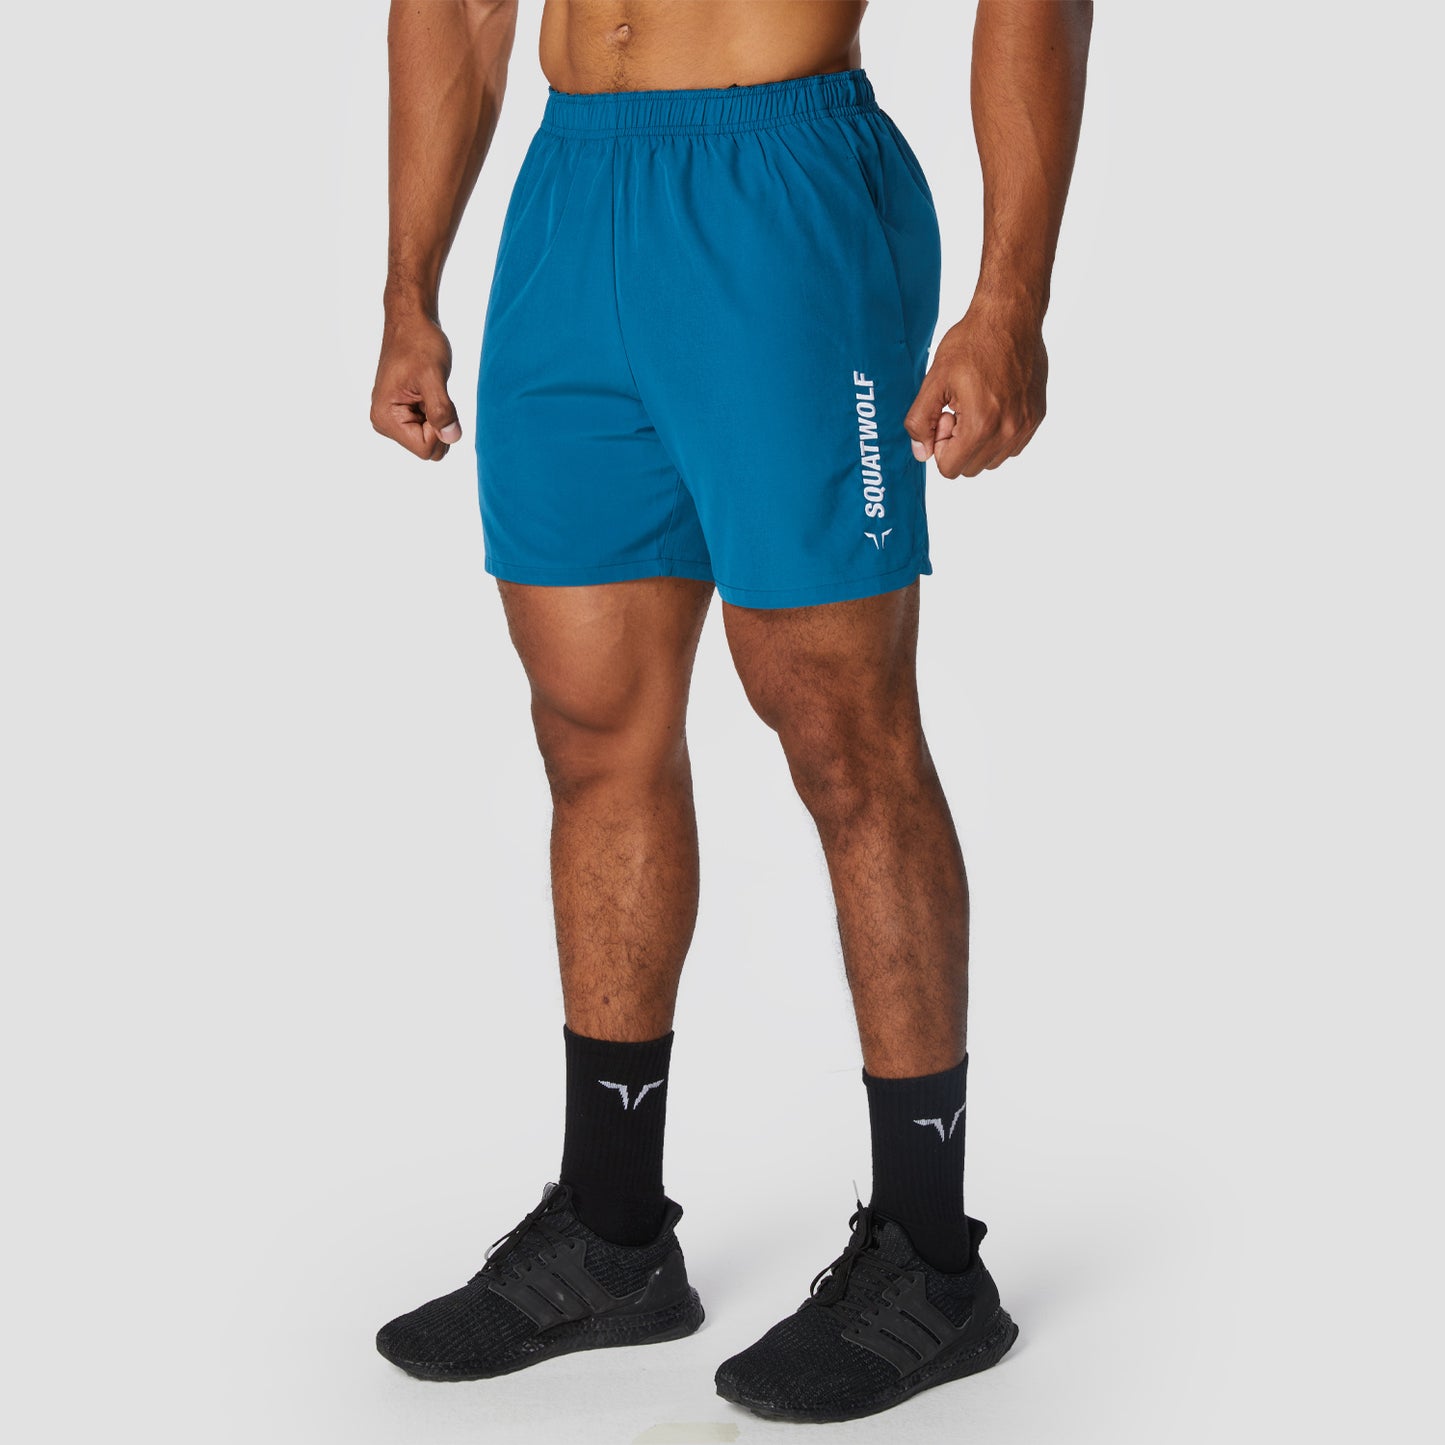 squatwolf-workout-short-for-men-warrior-shorts-teal-gym-wear